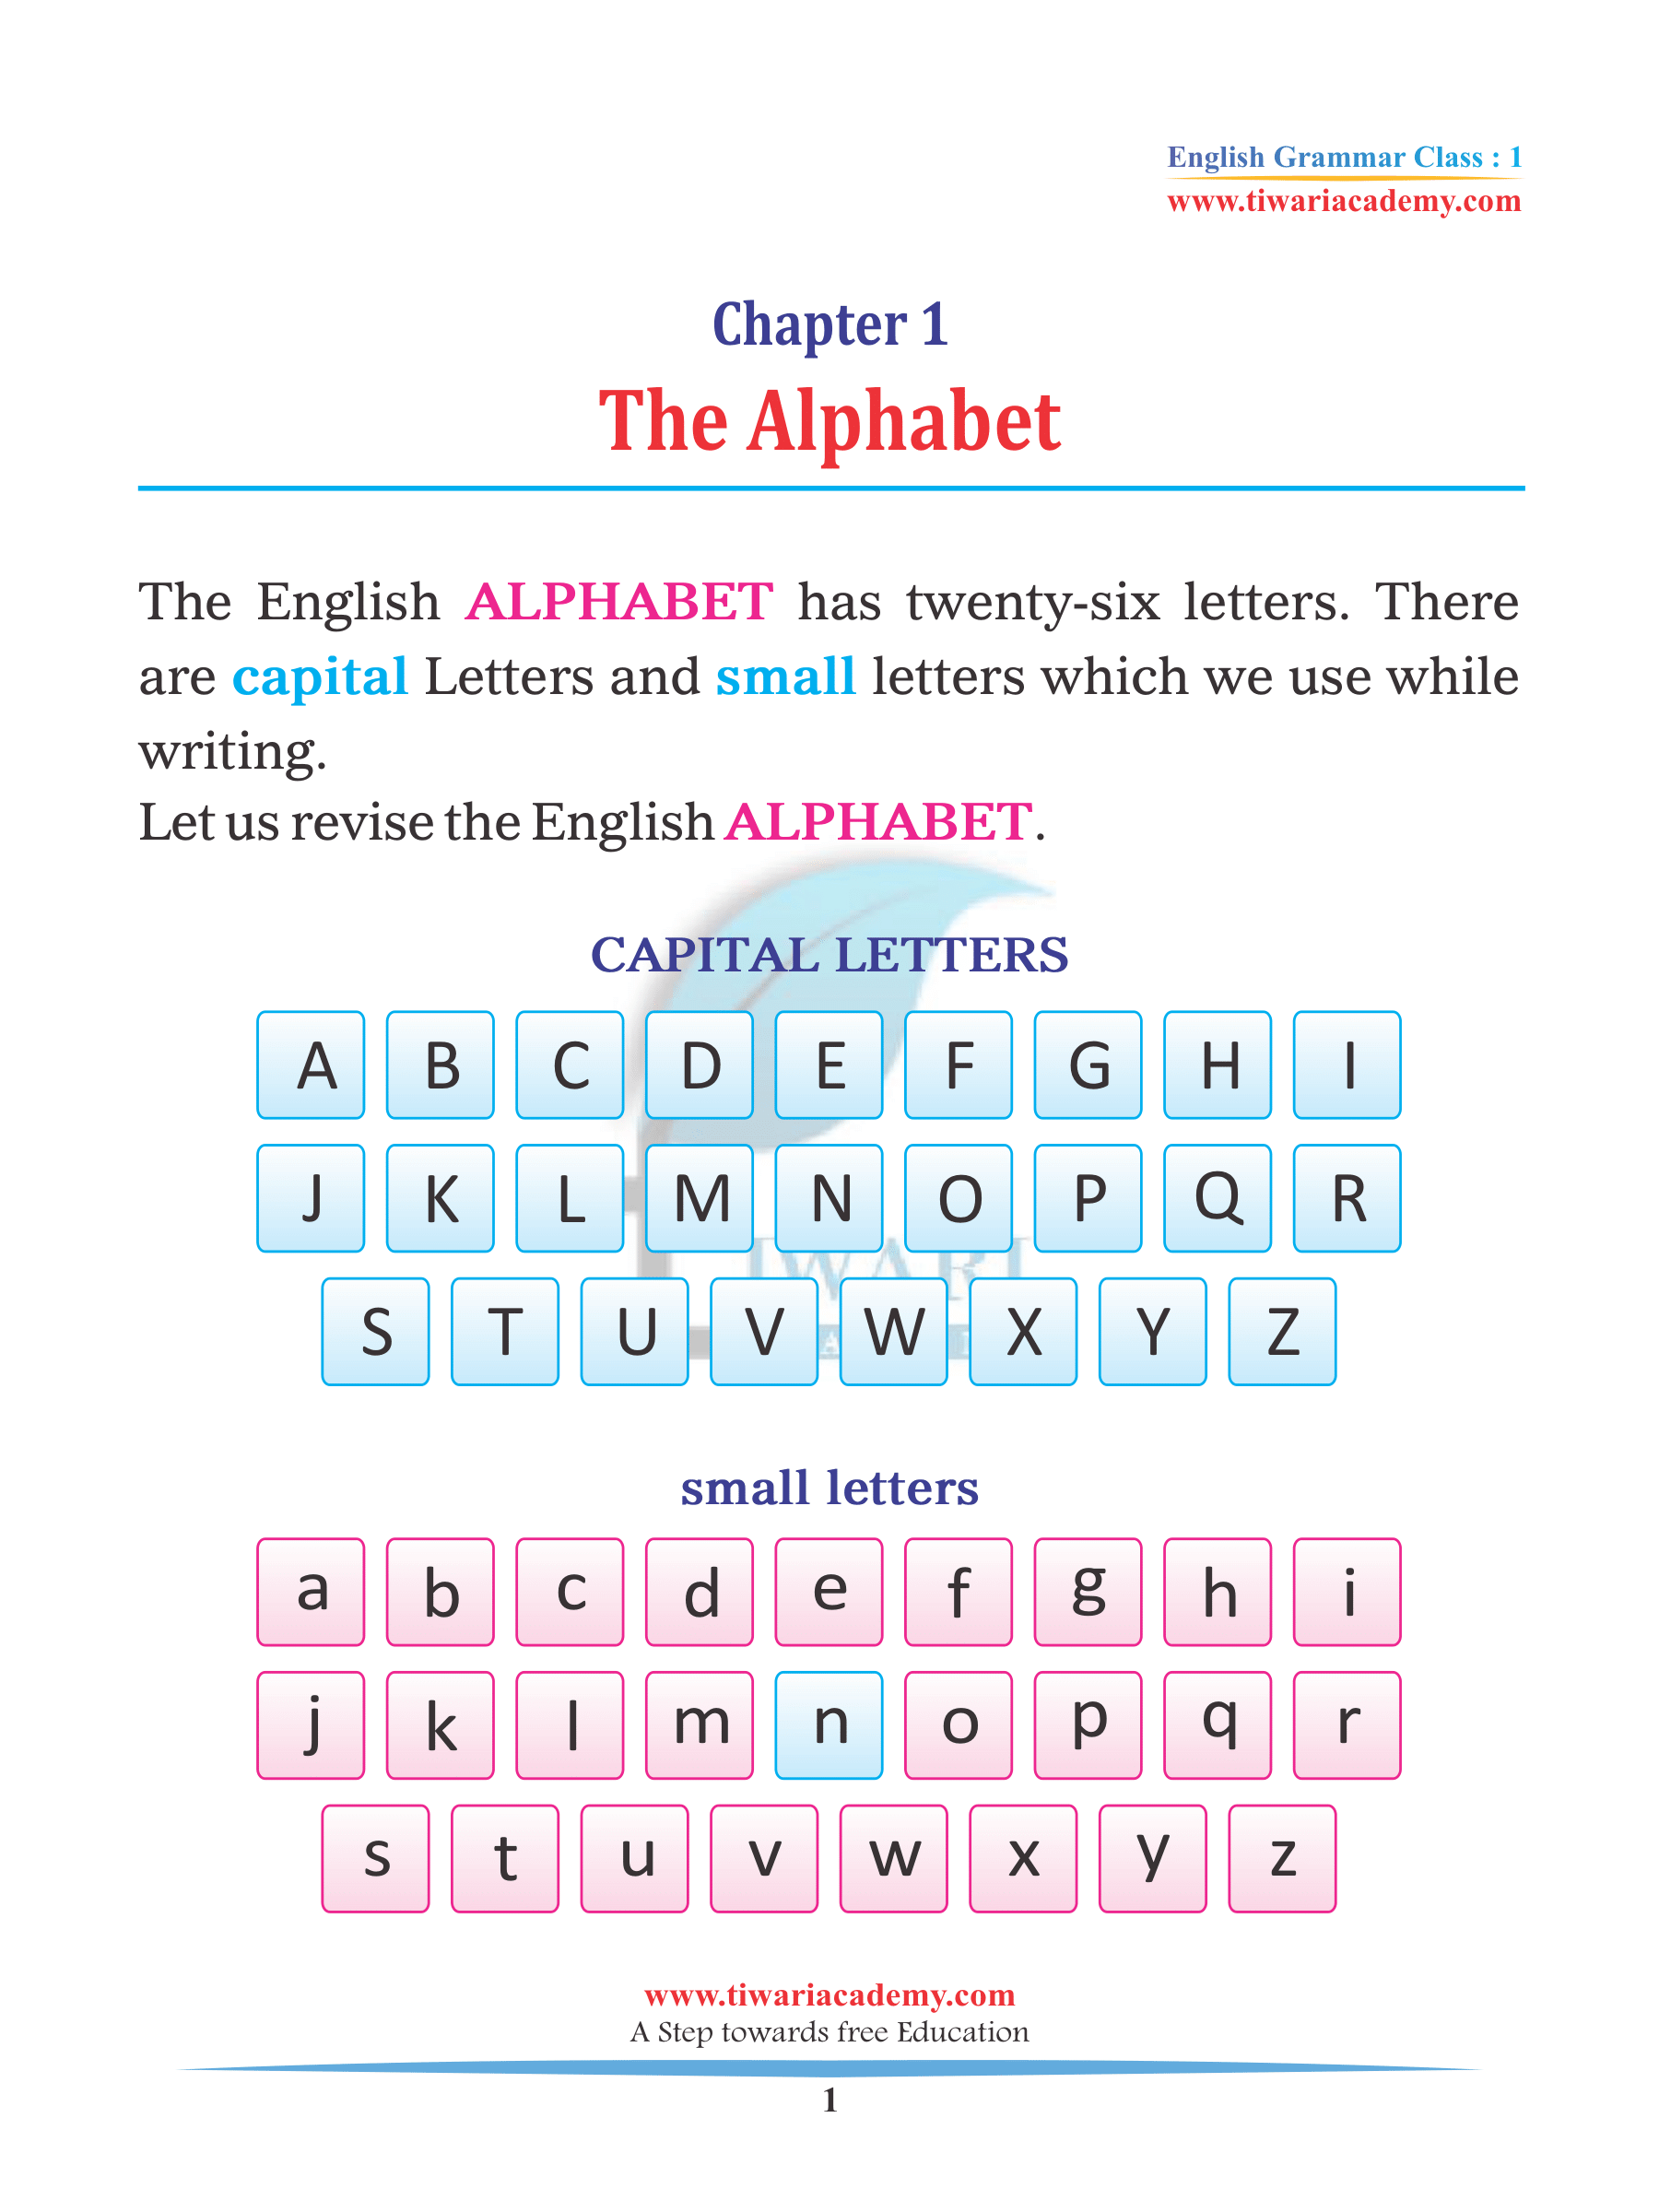 Alphabets for Class 1